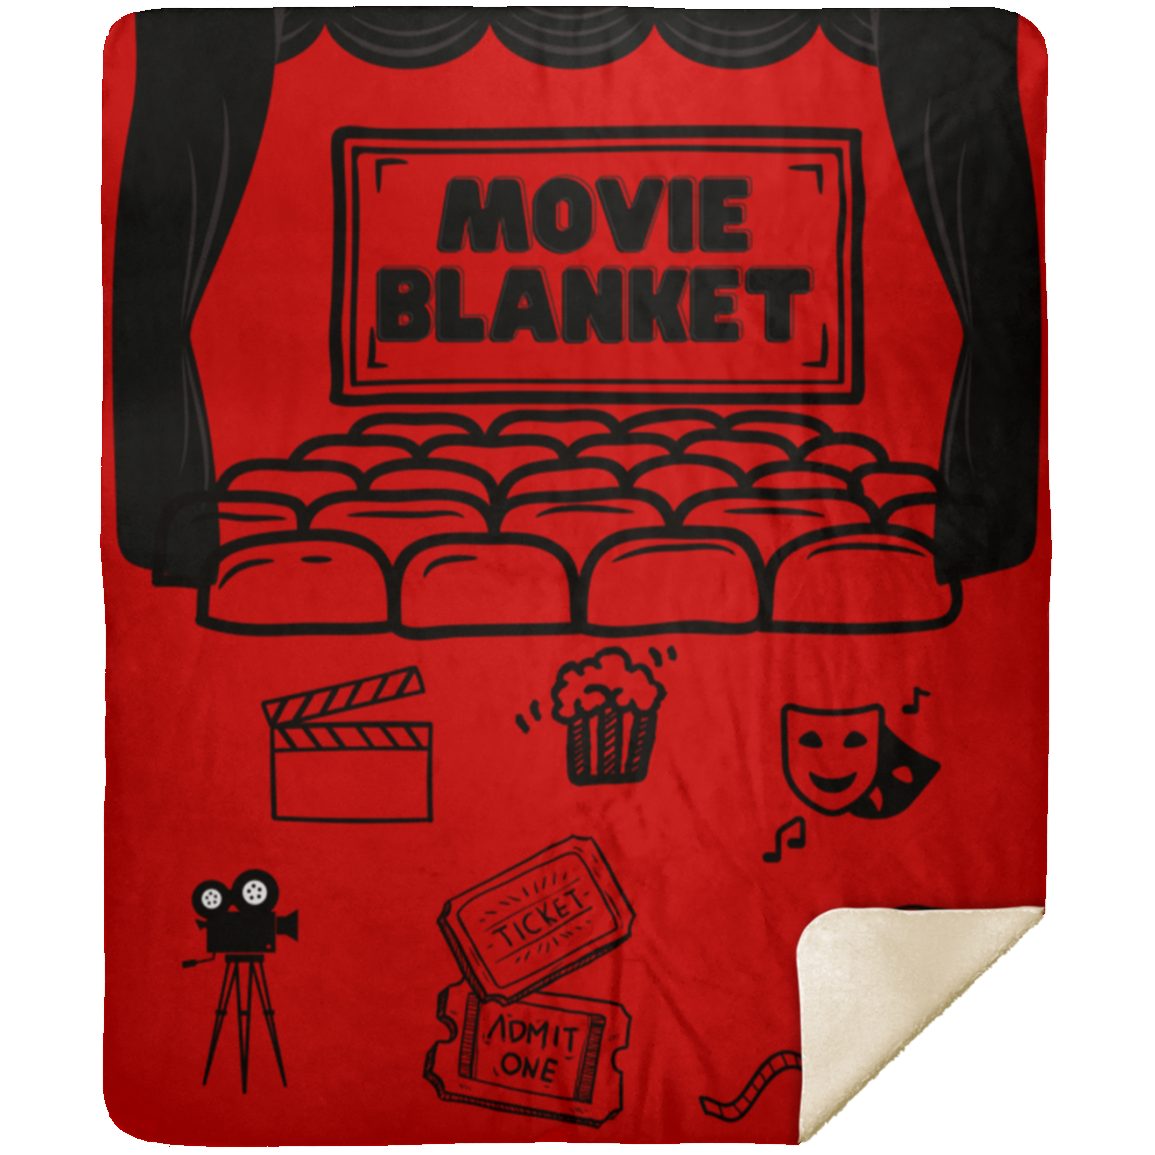 Movie Blanket - Premium Mink Sherpa Blanket 50x60